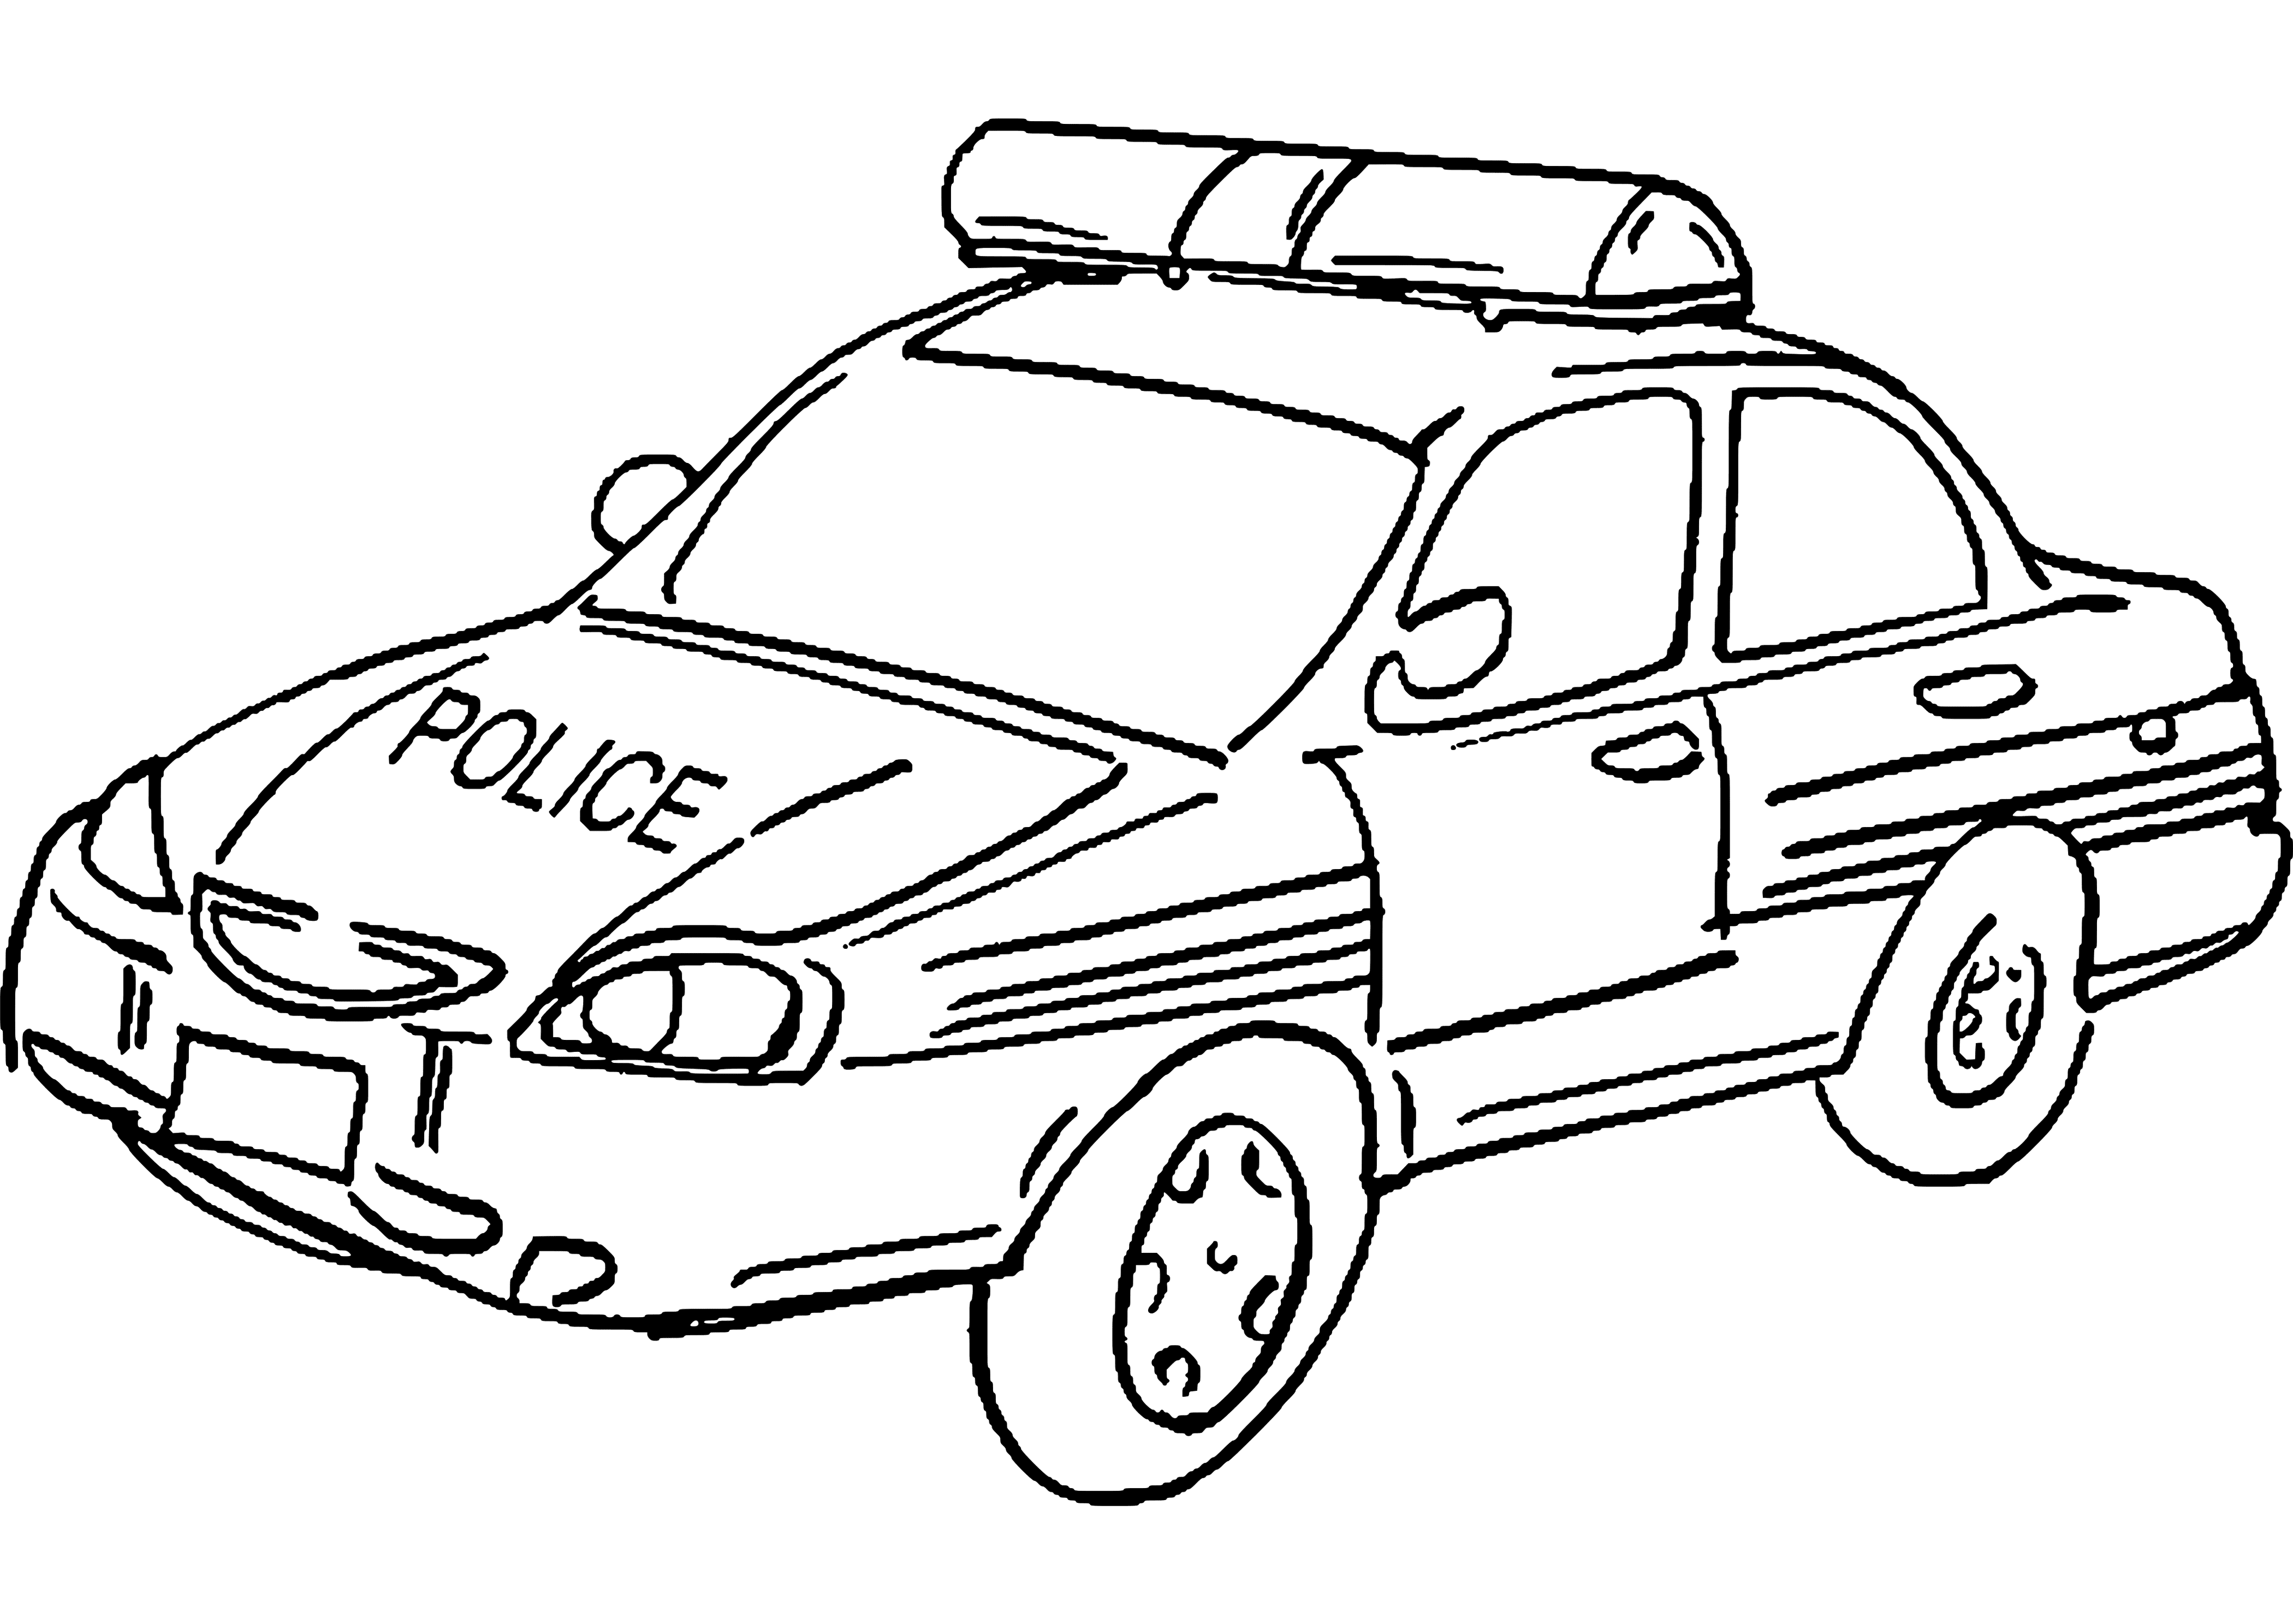 Drawing Police Car